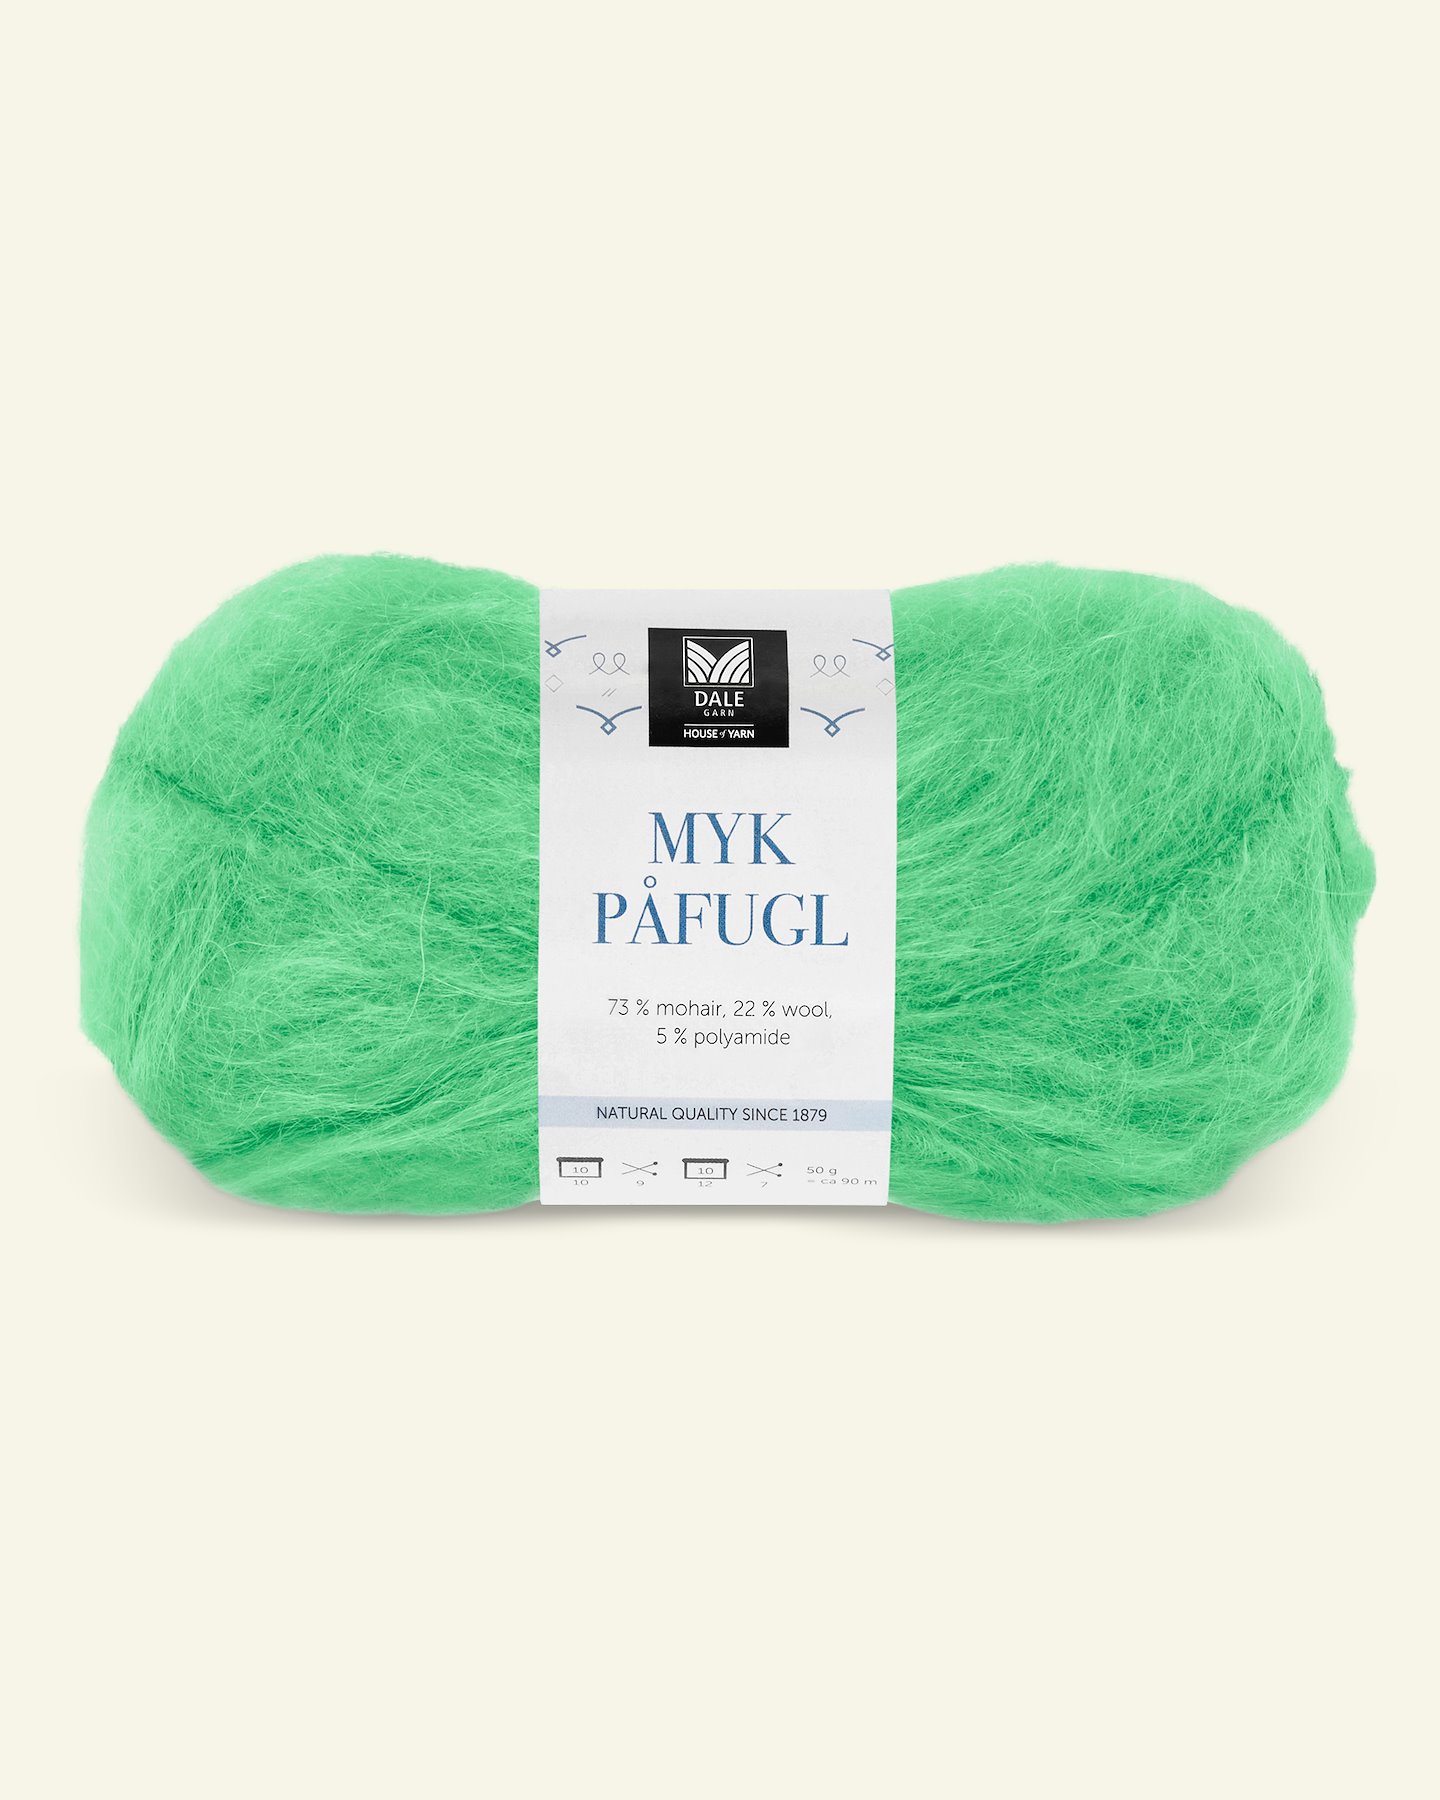 Dale Garn Myk Påfugl dark mint green 90001229_pack